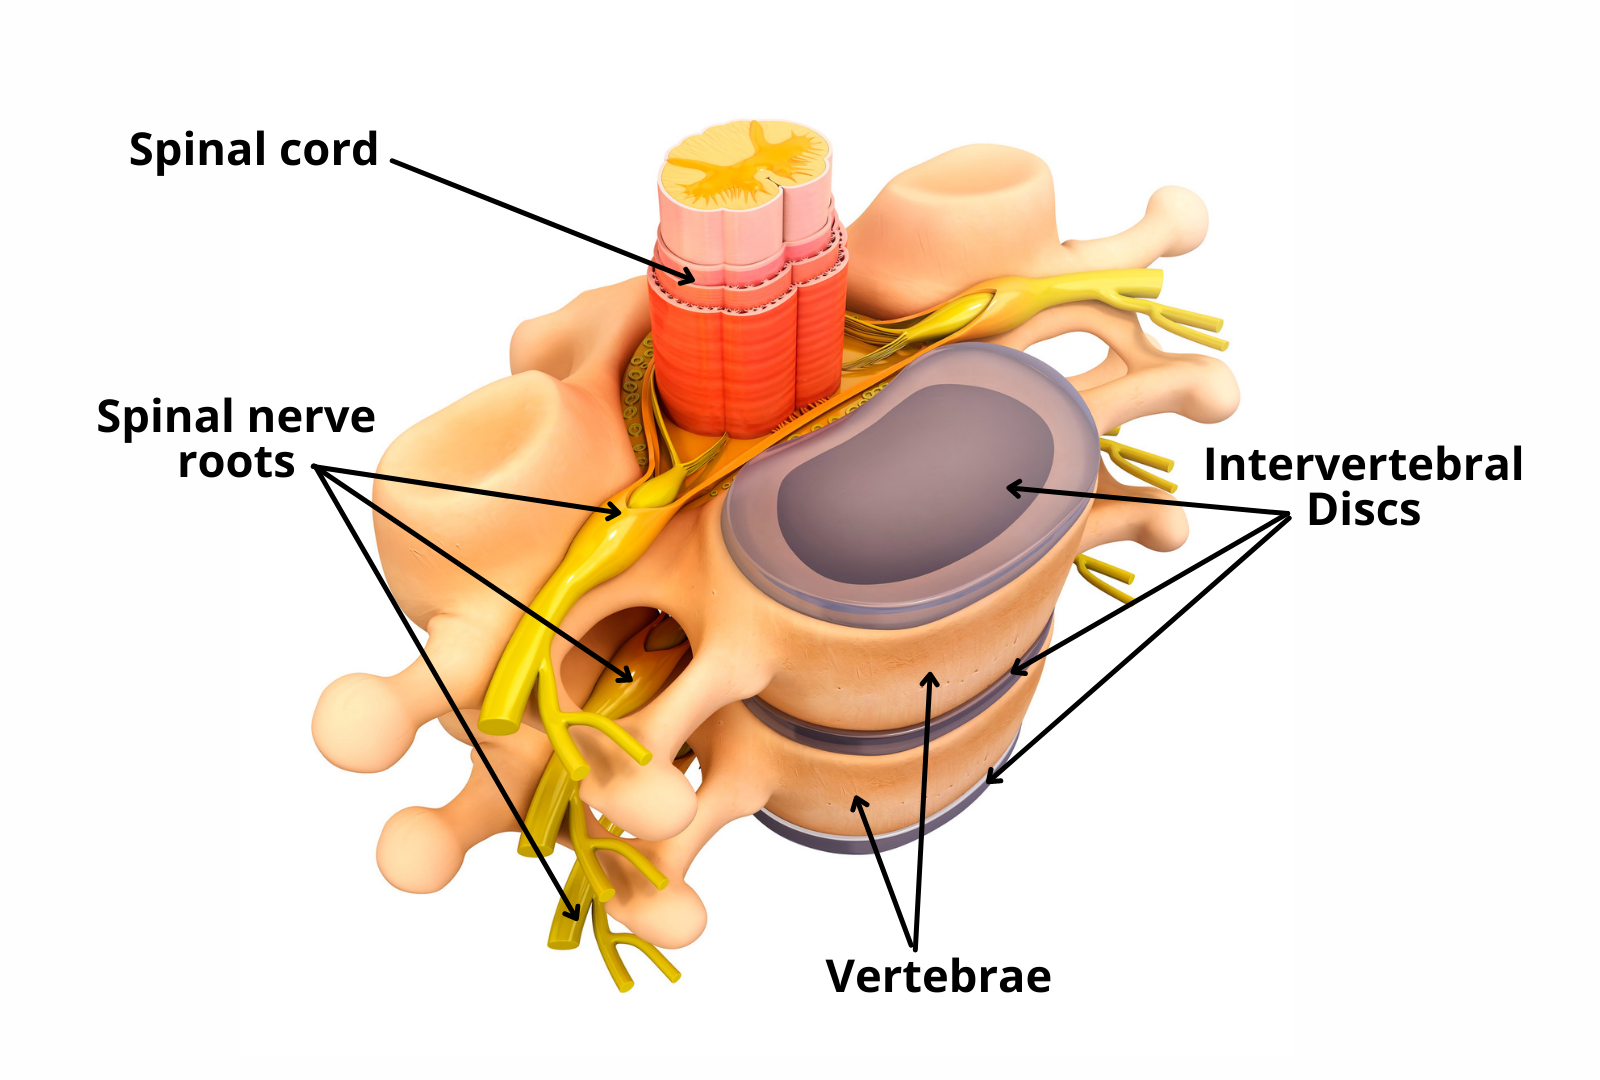 Compressed nerve roots